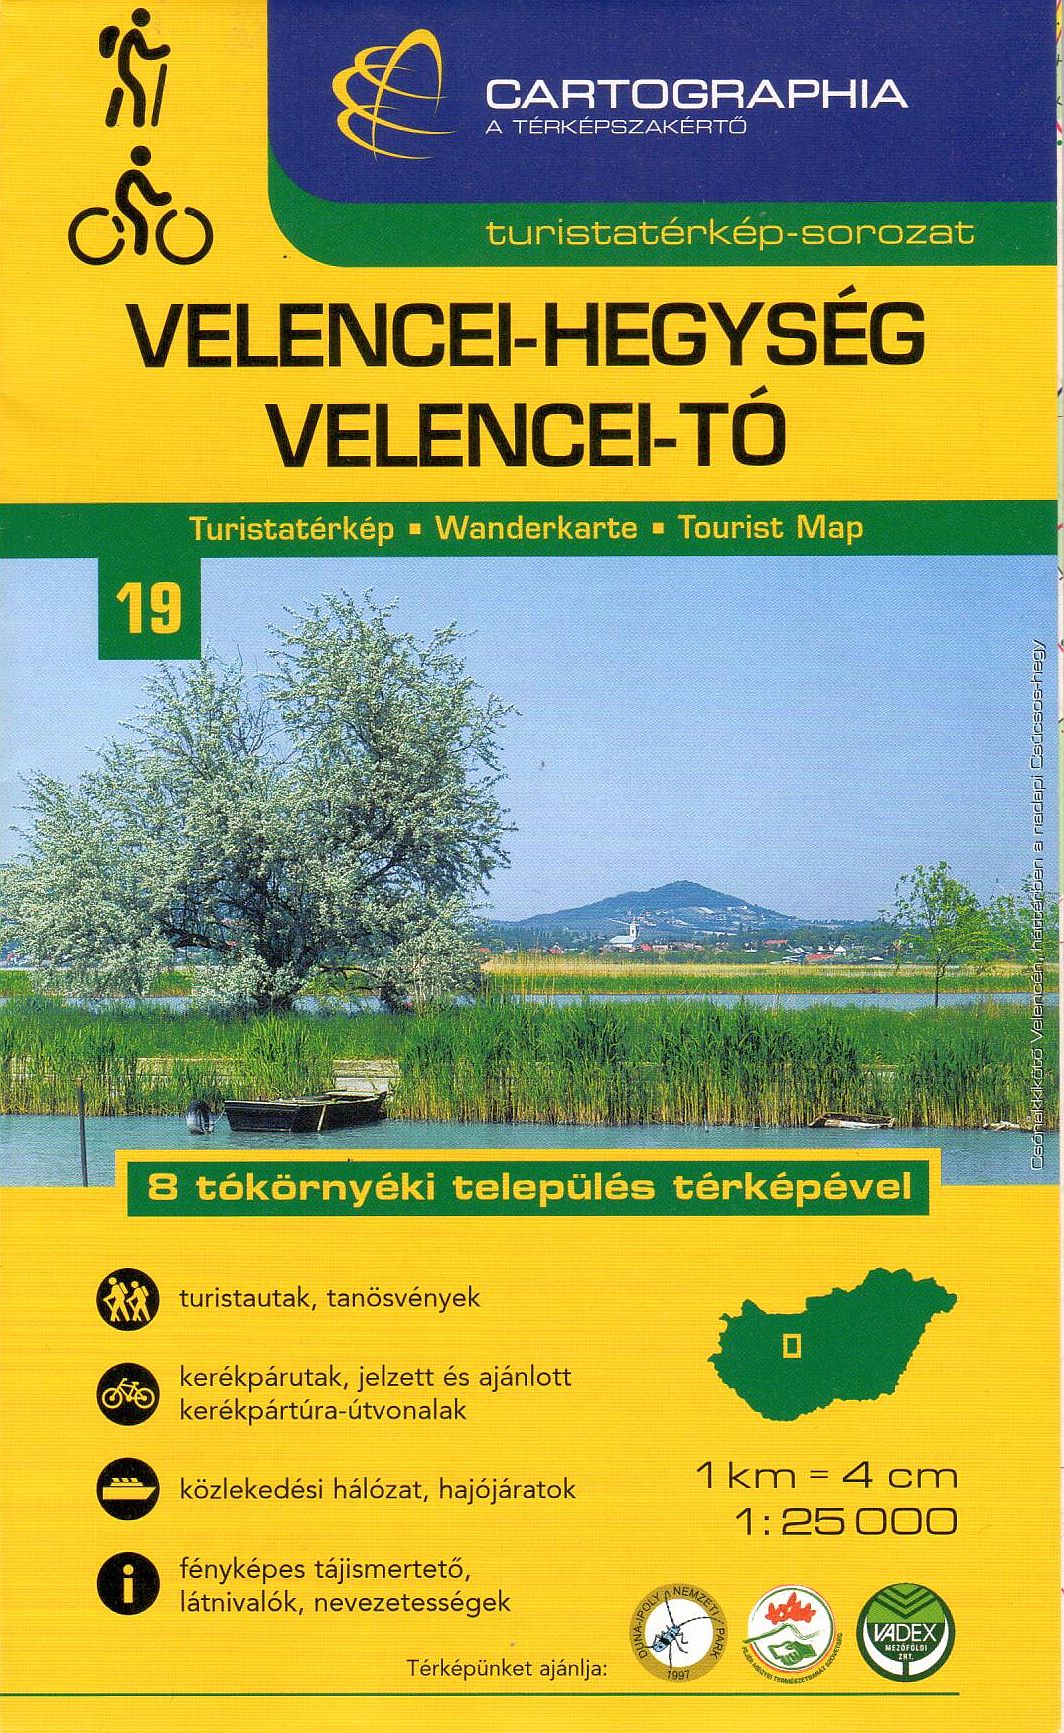  Velence hills and Velence lake  watersport, hiking and biking map